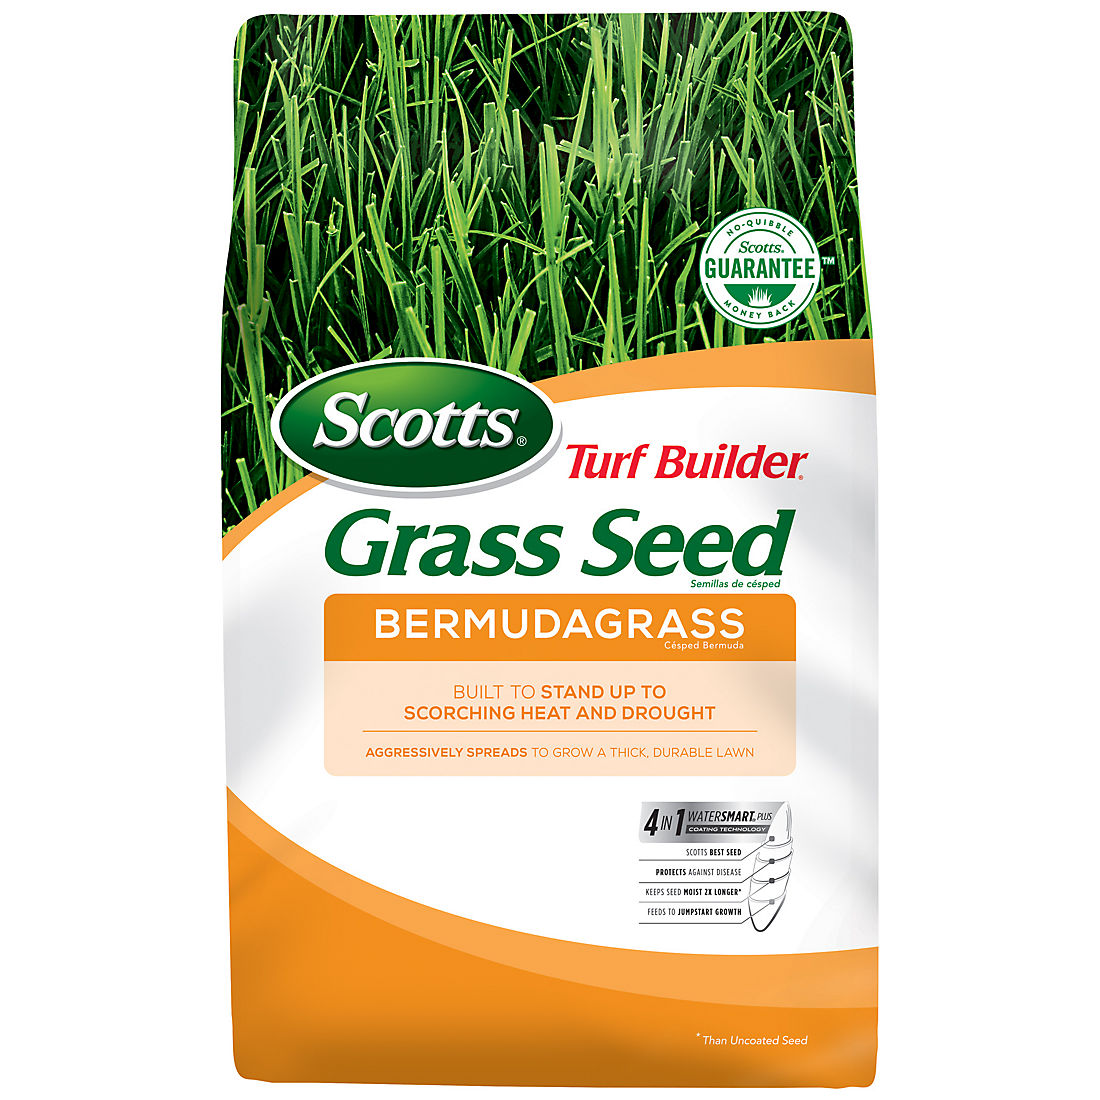 Scotts Turf Builder Grass Seed Bermudagrass 5 lb.